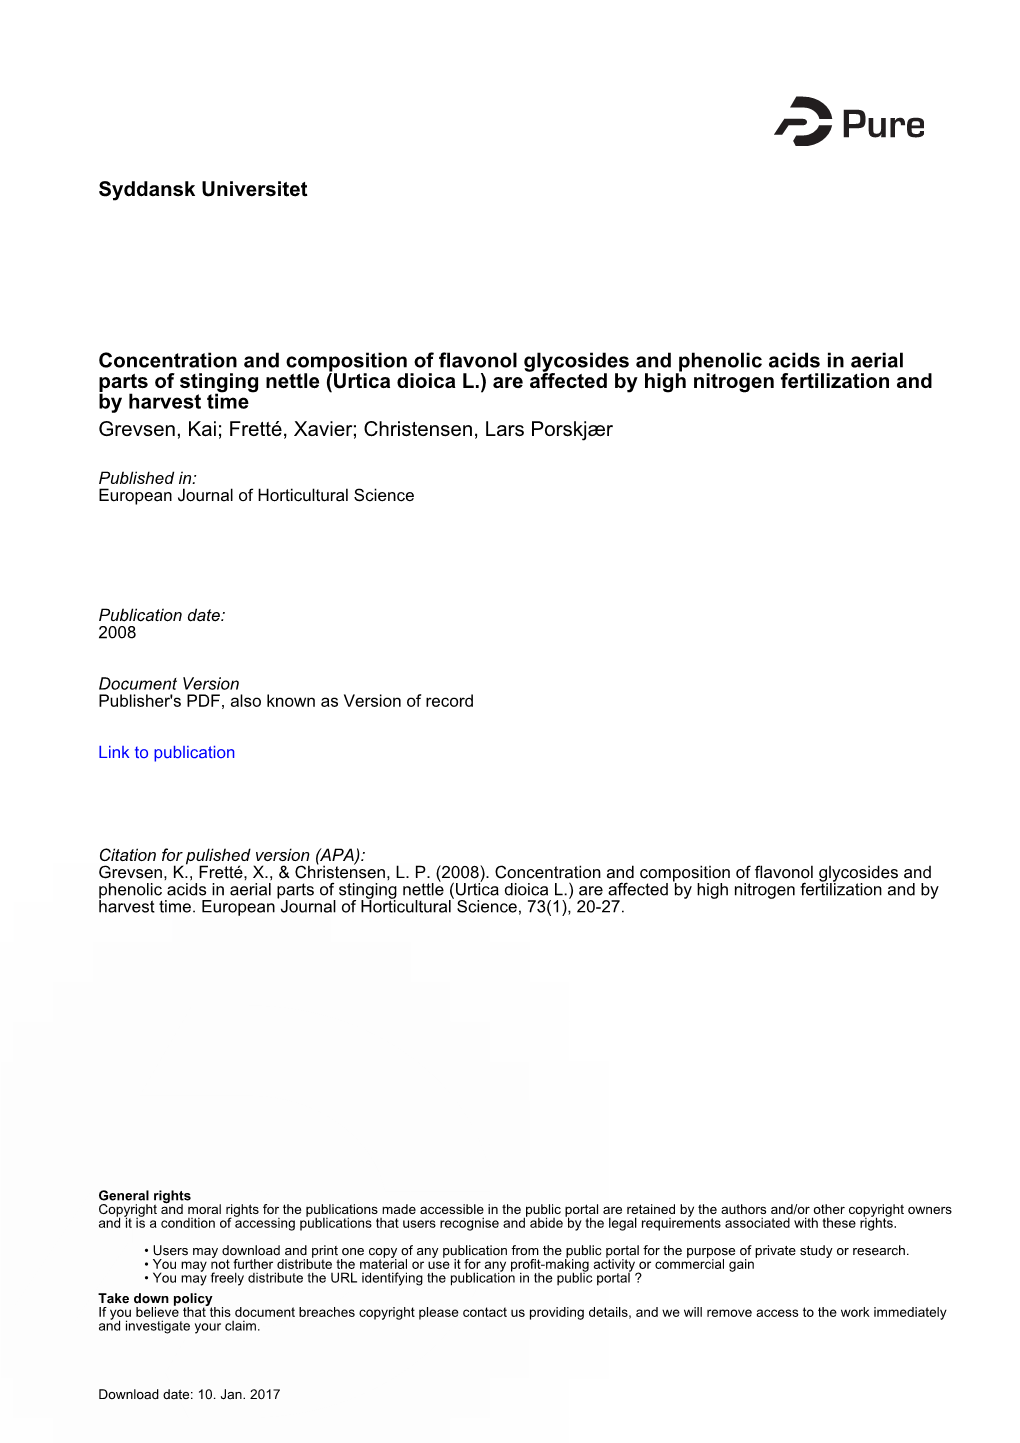 Syddansk Universitet Concentration and Composition of Flavonol